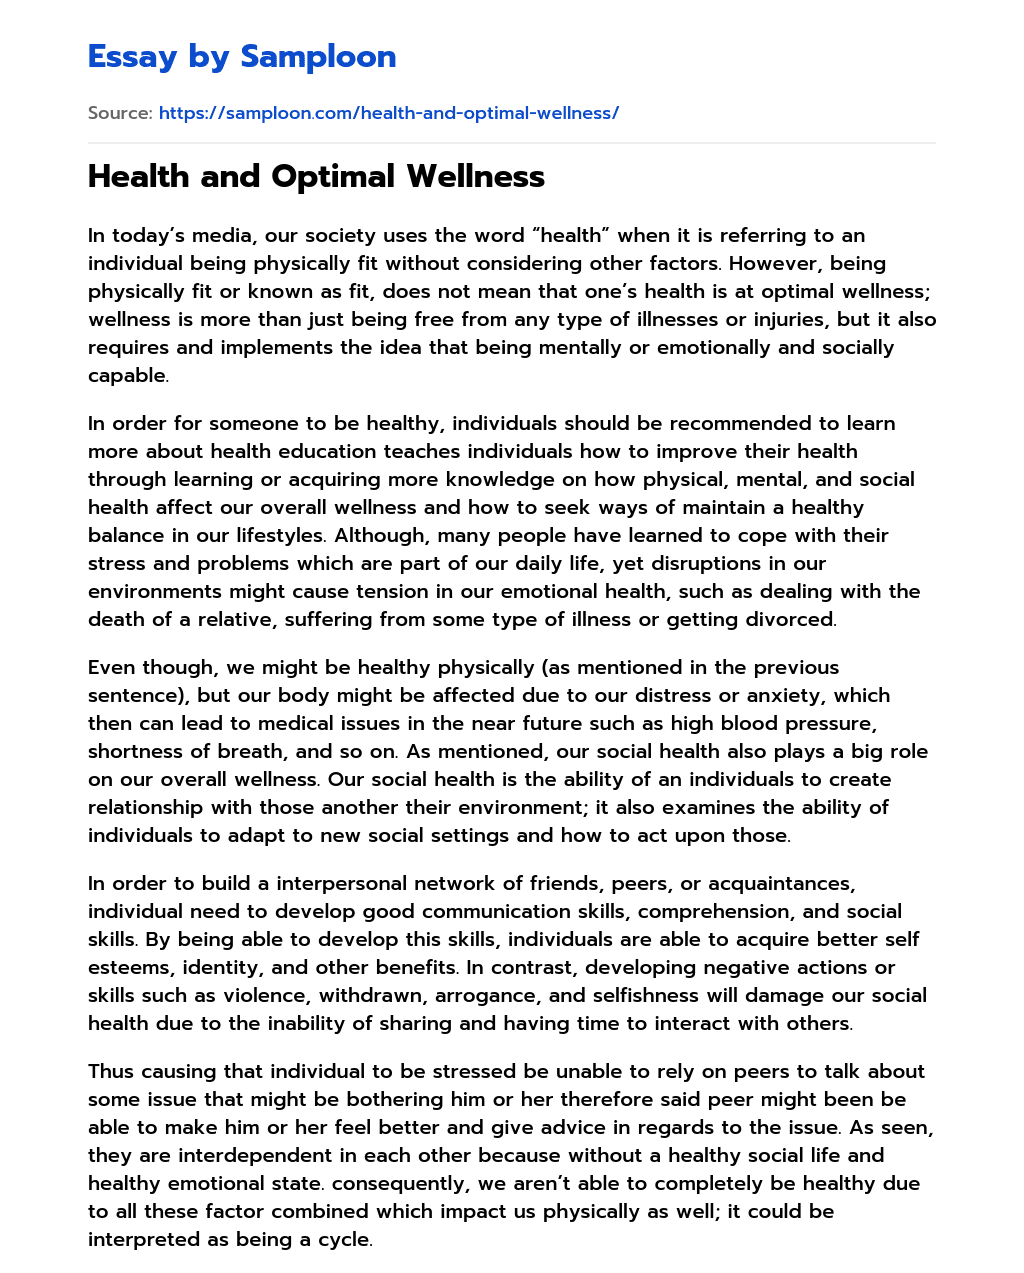 Health and Optimal Wellness essay